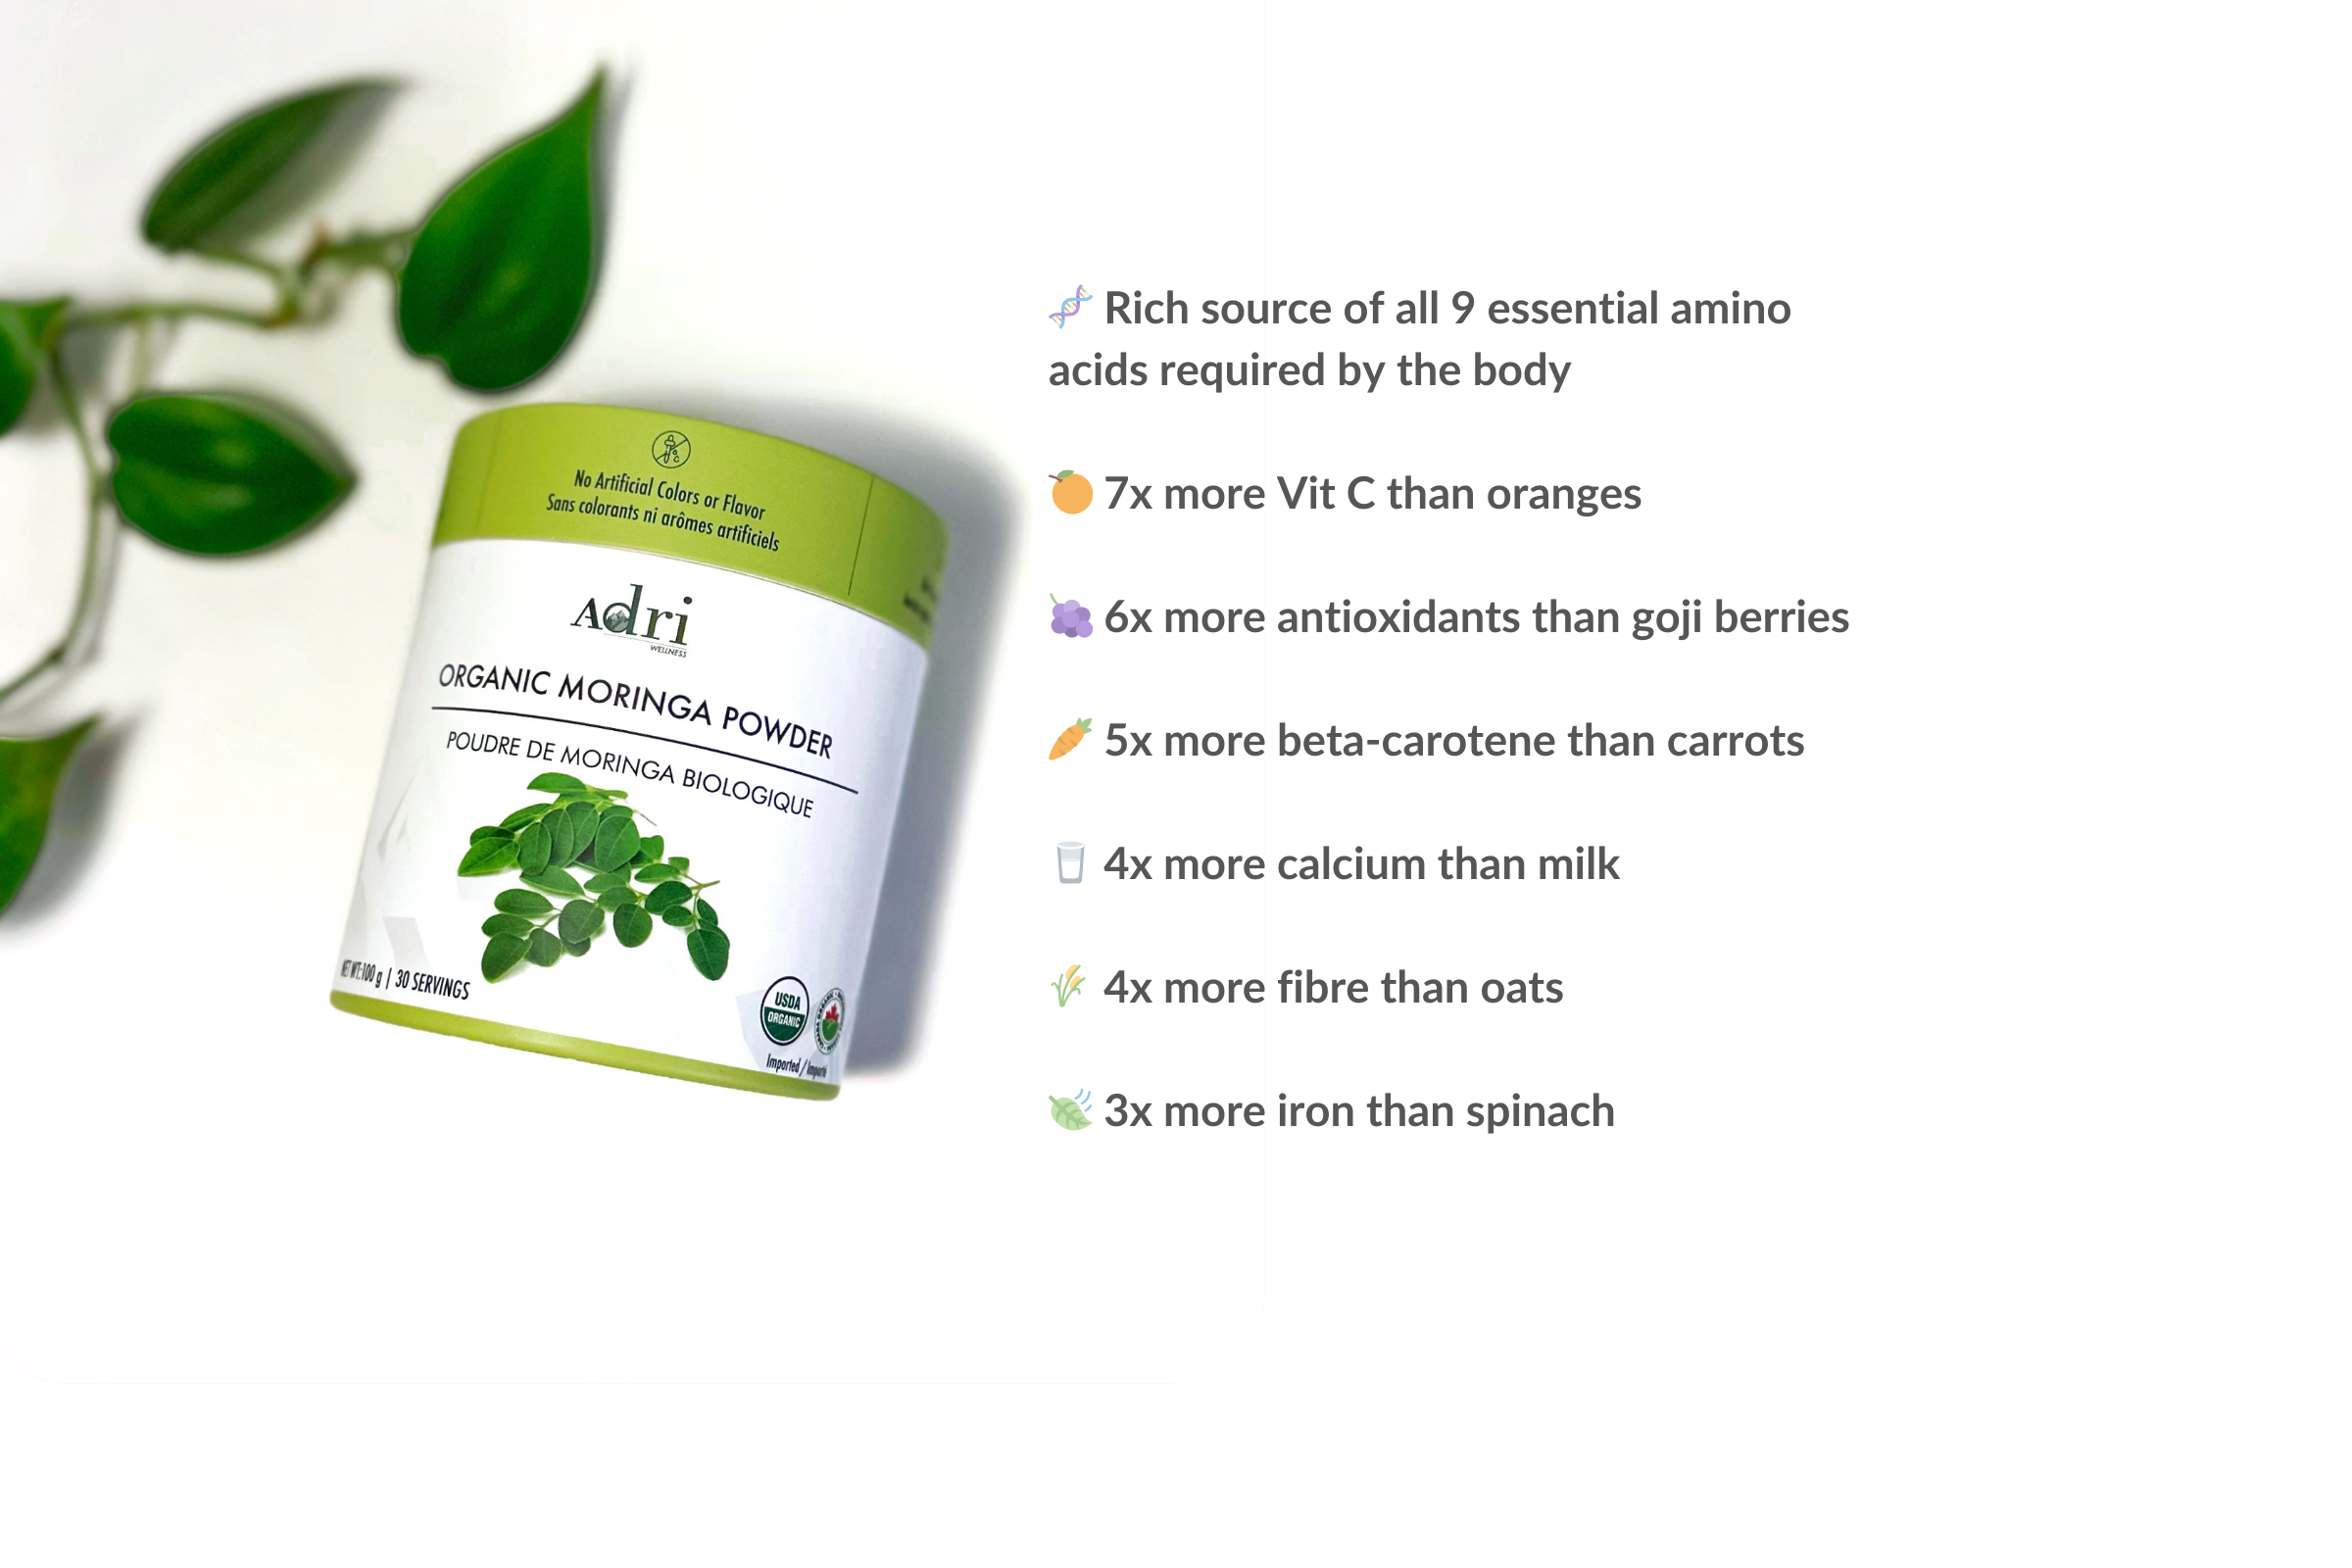 image shows Adri Wellness' 100 gm Organic Moringa powder with its amazing nutritional facts 